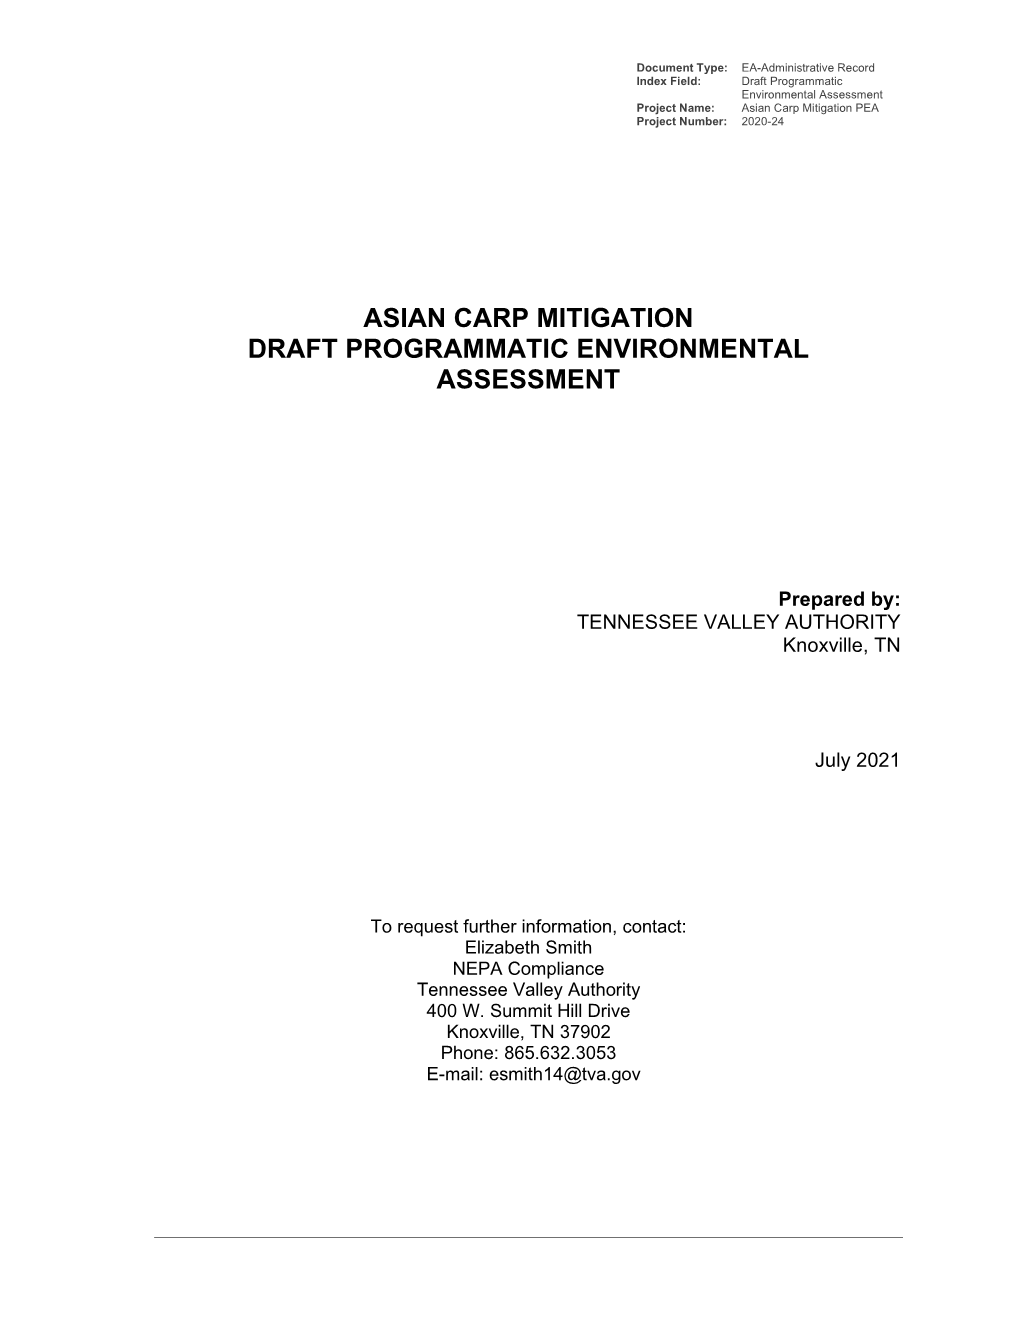 Asian Carp Mitigation Draft Programmatic Environmental Assessment